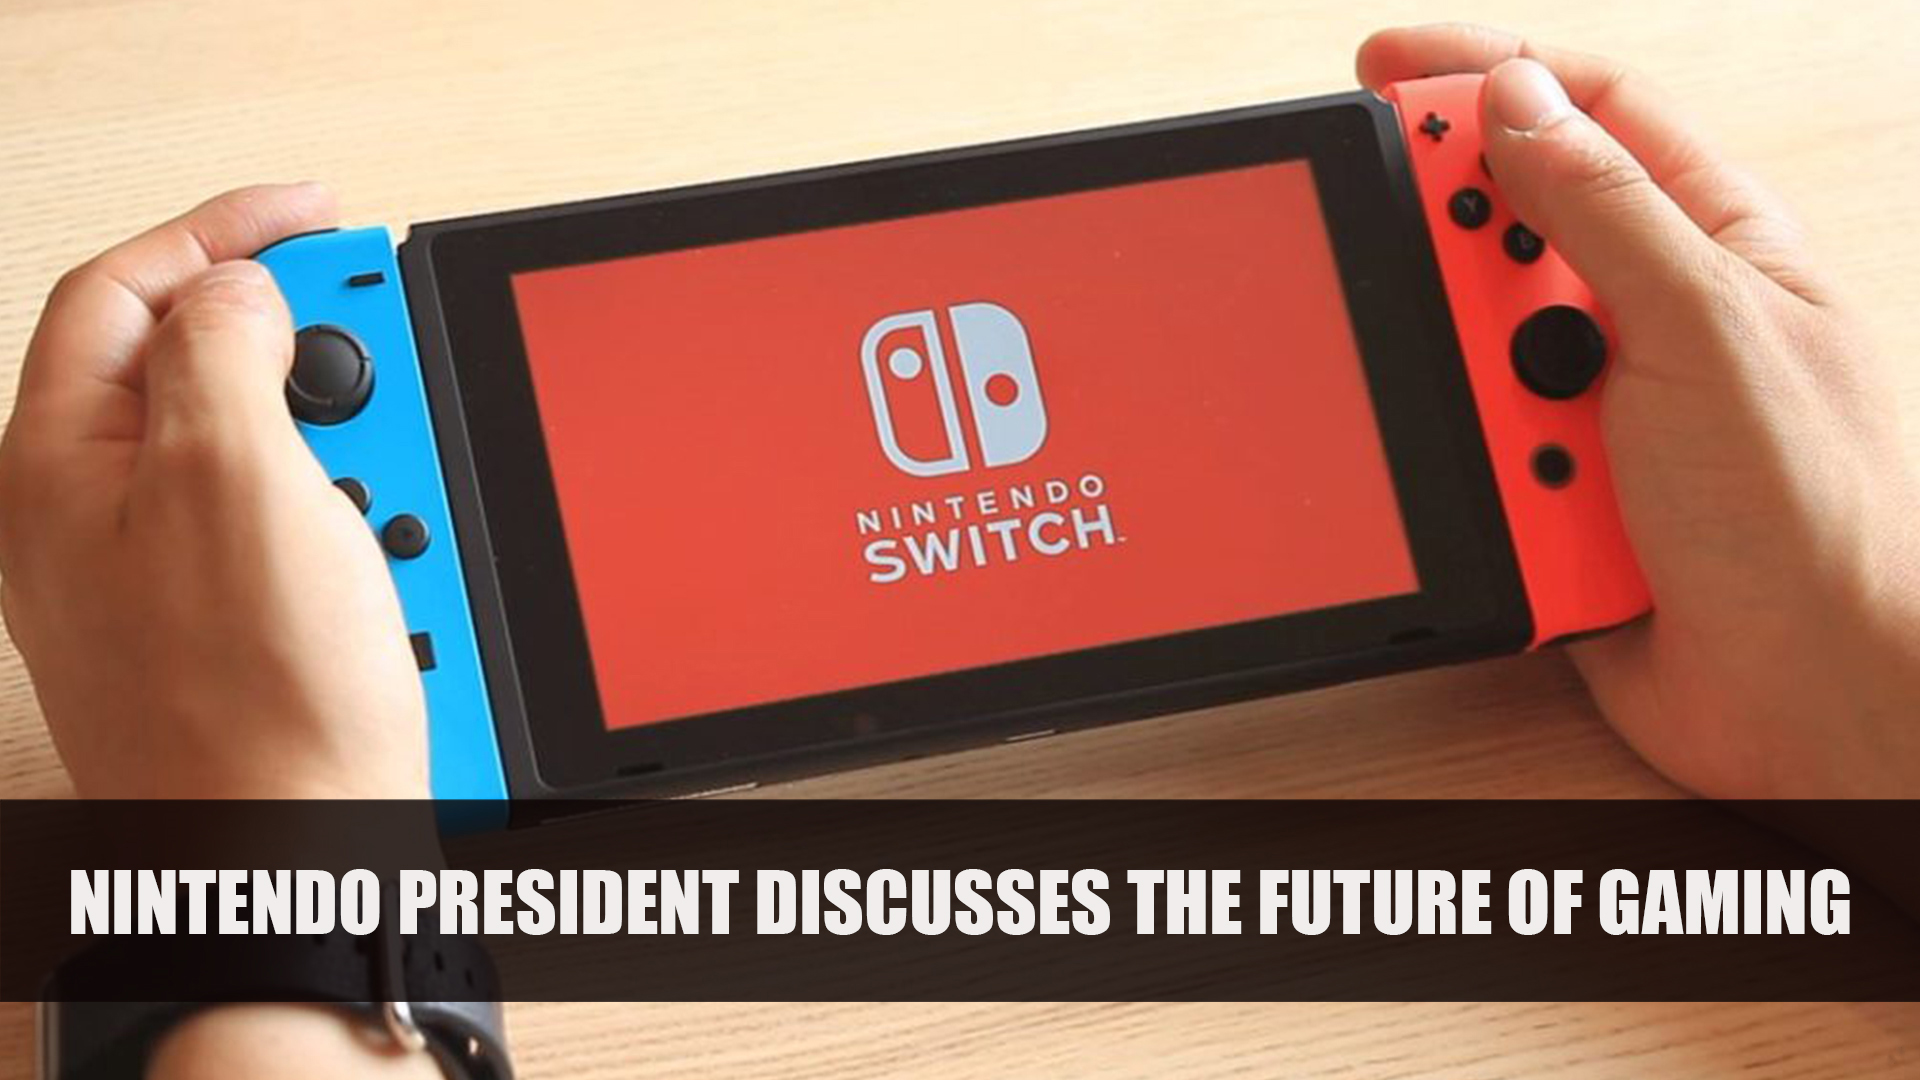 Nintendo switch play play